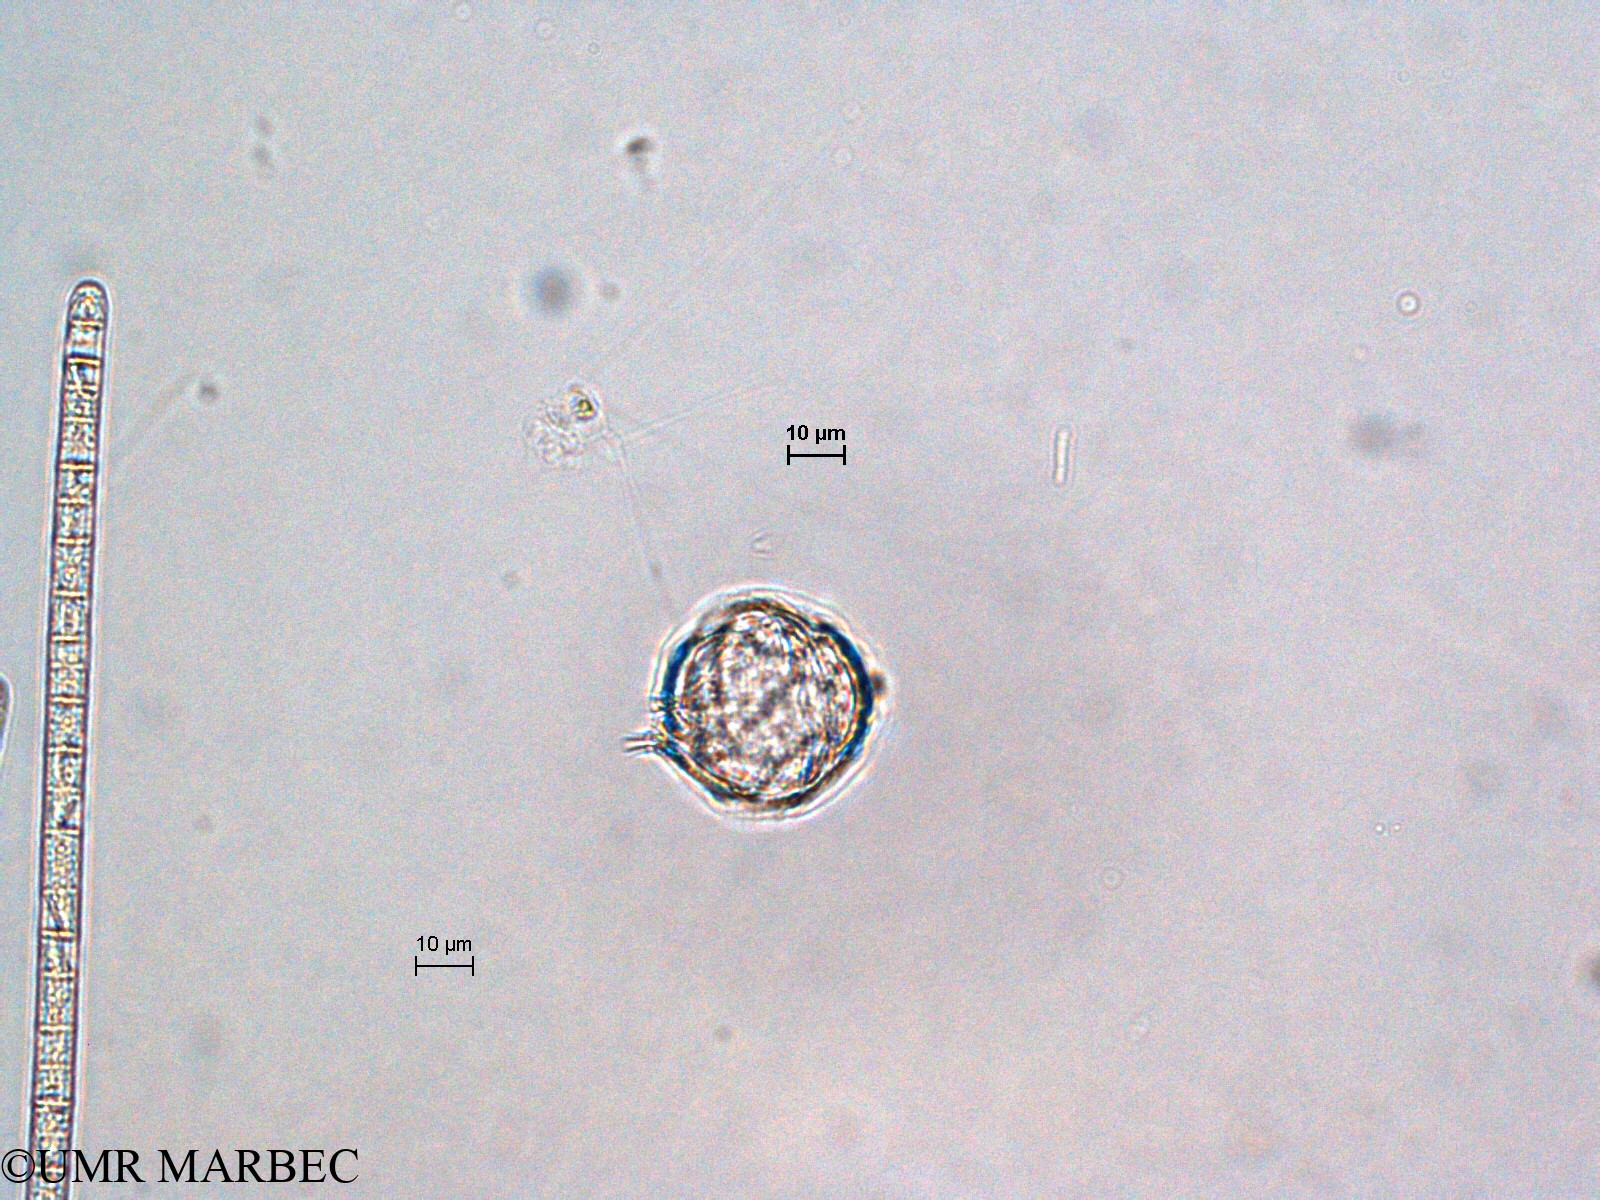 phyto/Scattered_Islands/all/COMMA April 2011/Protoperidinium sp21 (ancien Protoperidinium sp3)(copy).jpg